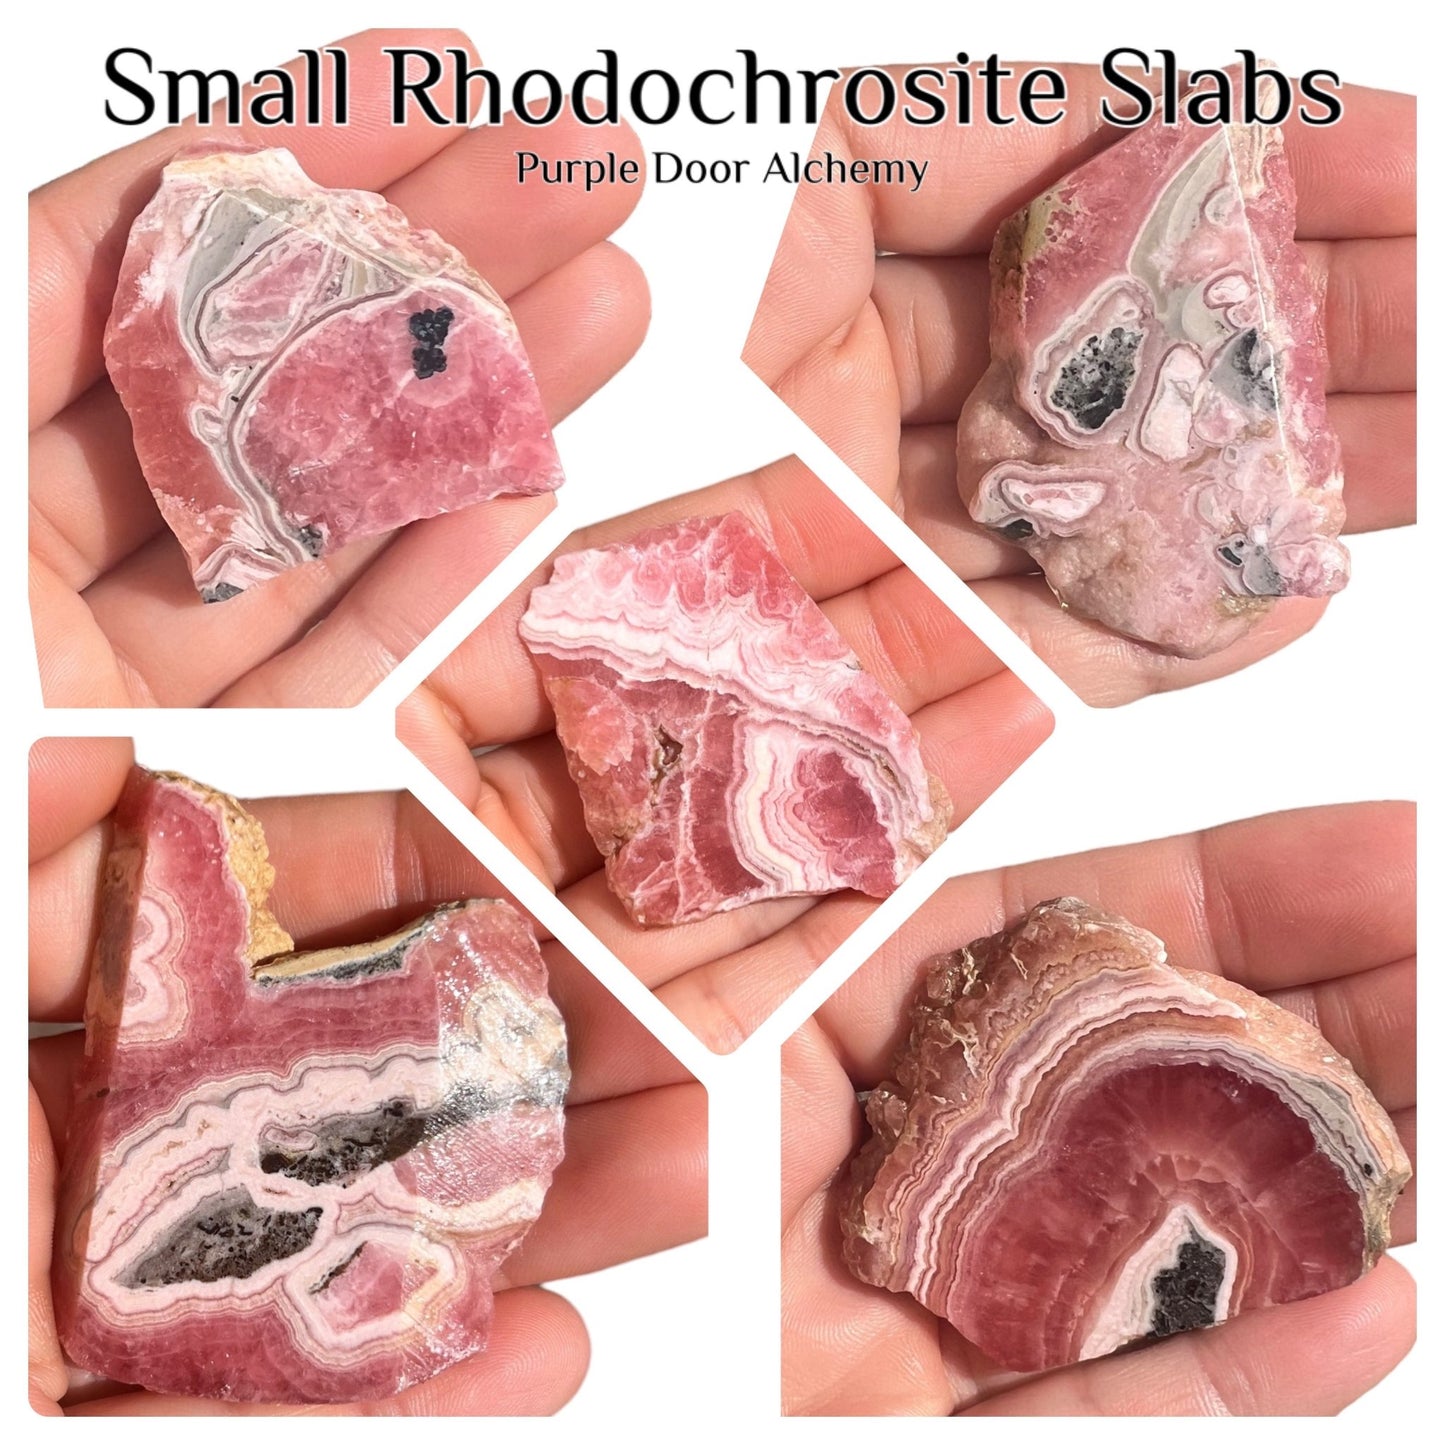 Small Rhodochrosite Slabs - Purple Door Alchemy